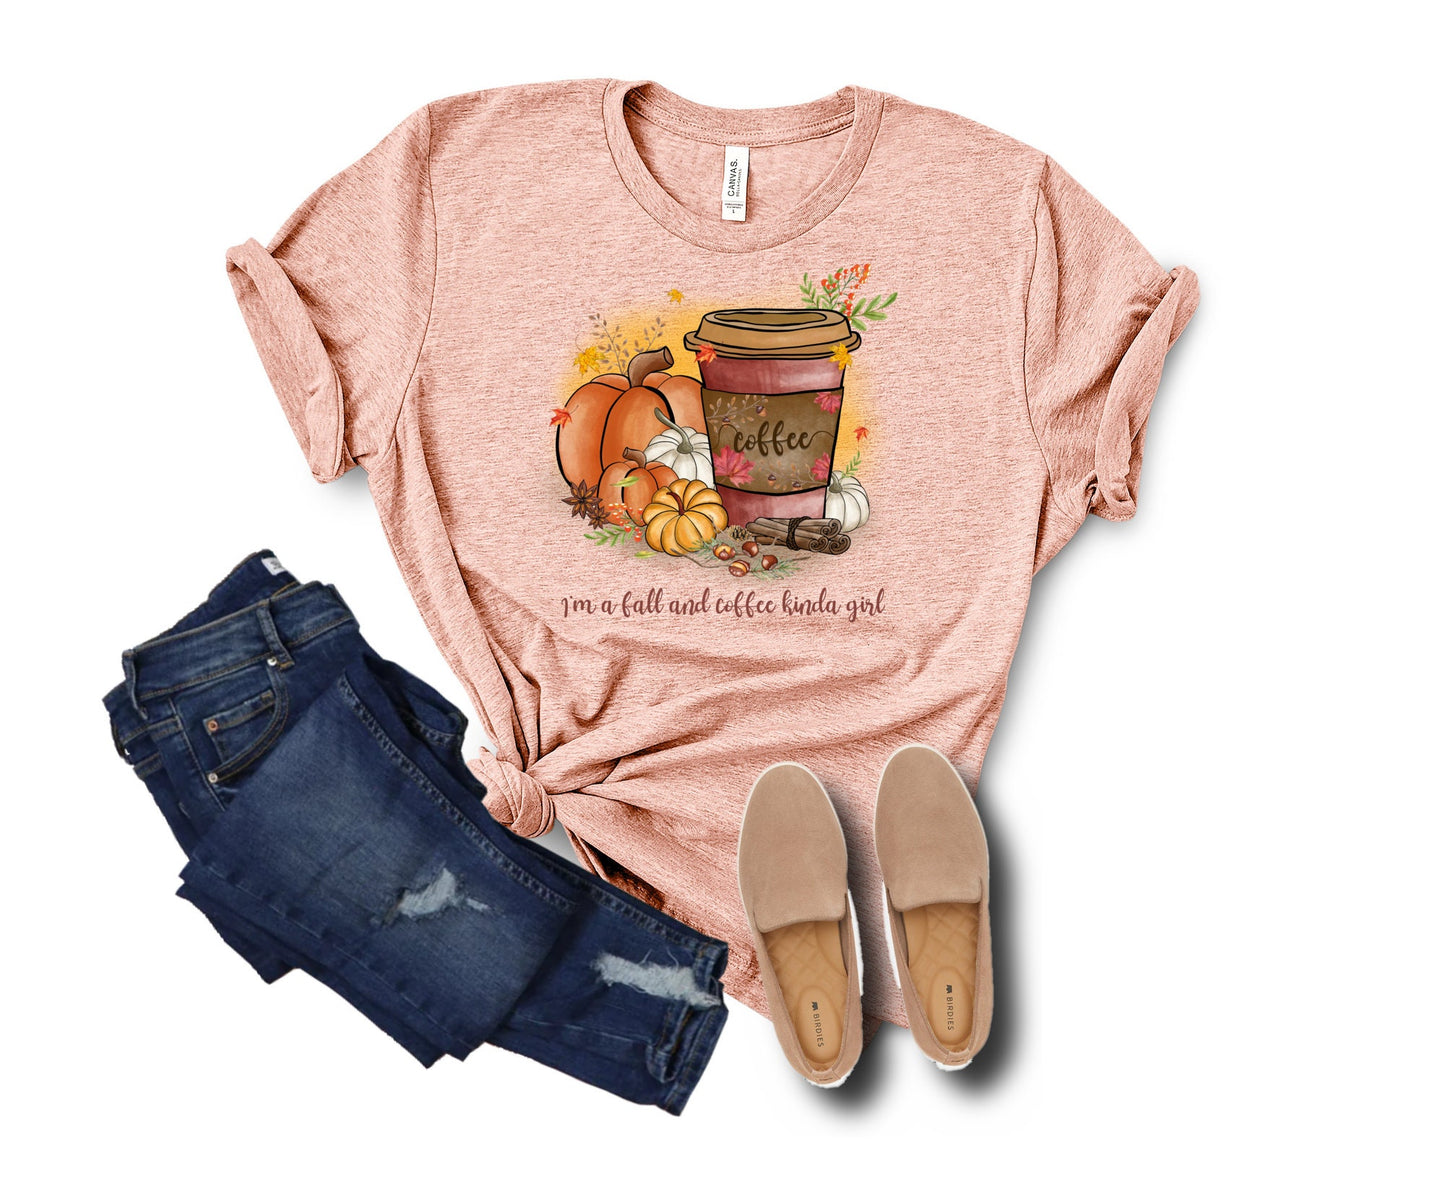 I'm A Fall and Coffee Kinda Girl Shirt, Cute Fall and Coffee T-Shirt, Pumpkin Shirt, Autumn Shirt, Hello Fall, Thanksgiving, Fall Lover